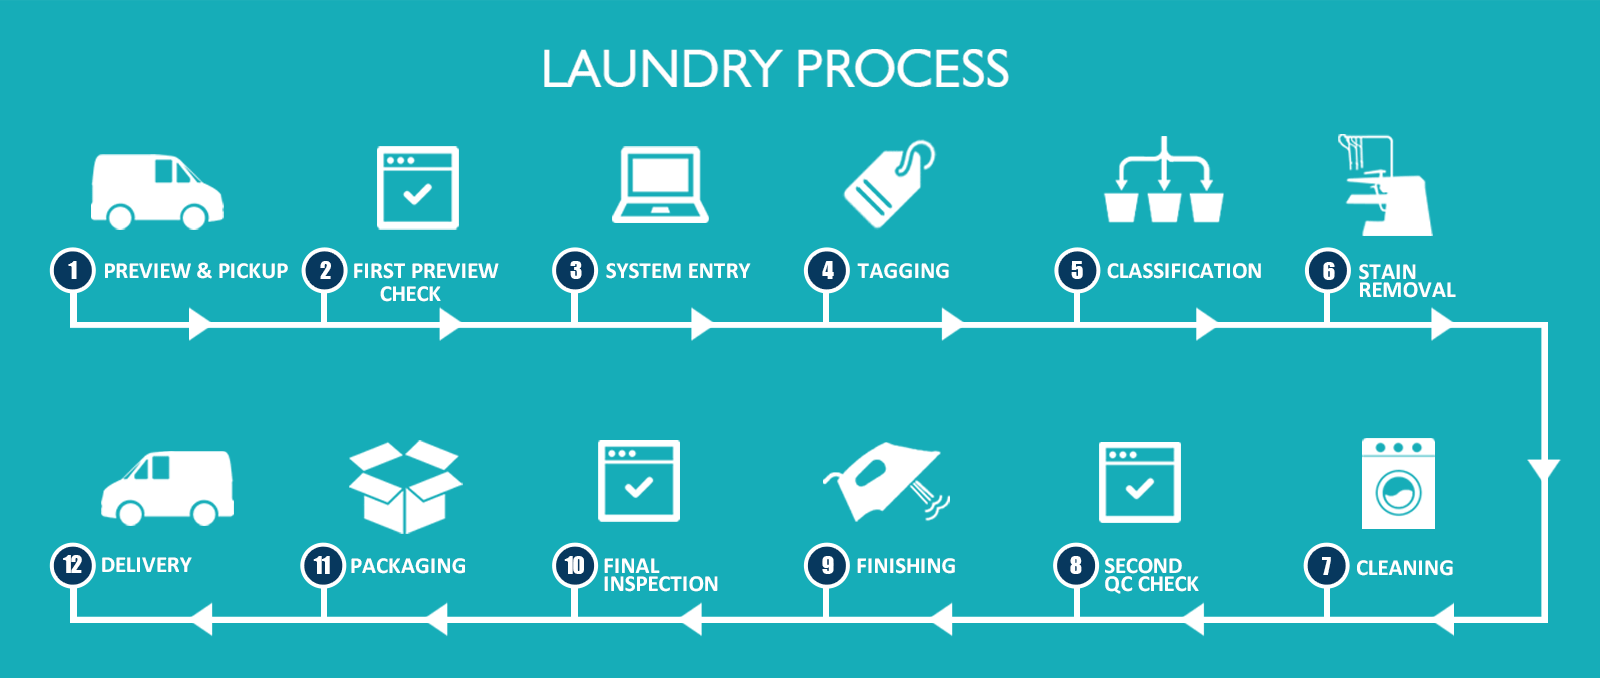 Laundry Process Flow Chart